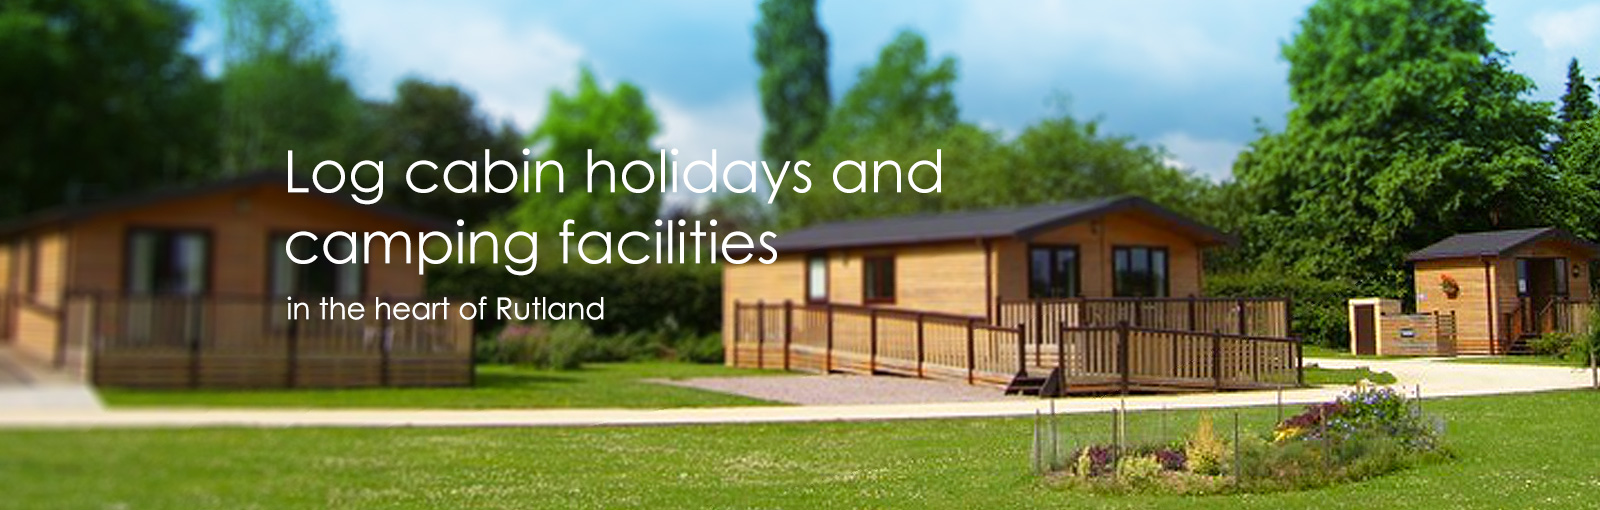 Log cabin holidays and camping facilities in the heart of Rutland